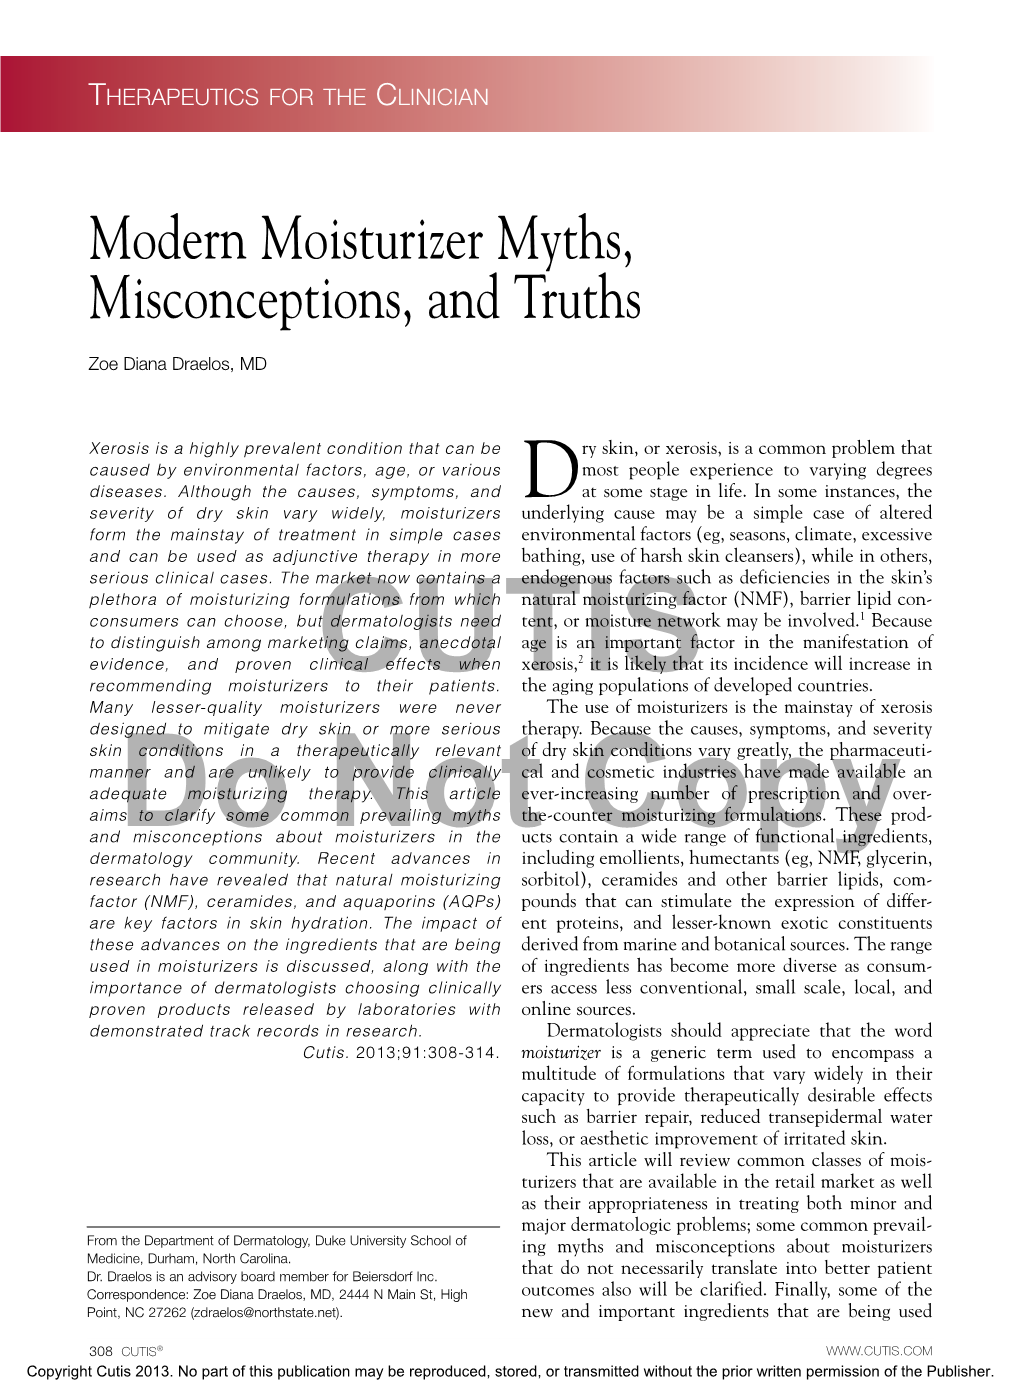 Modern Moisturizer Myths, Misconceptions, and Truths